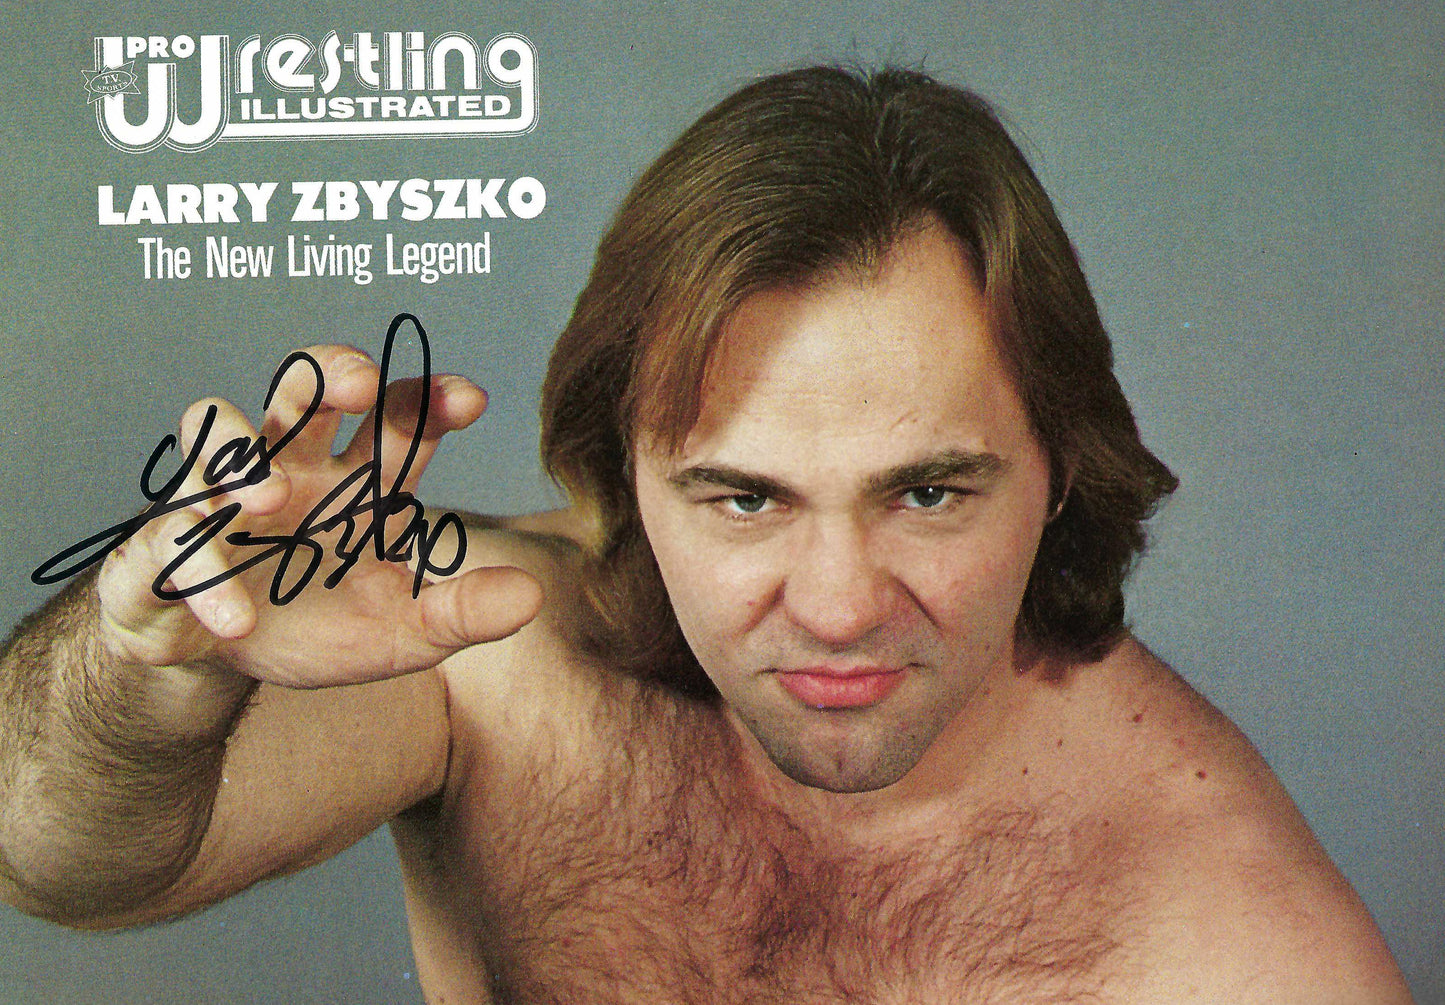 BD3  Larry Zbyszko Autographed Vintage Wrestling Magazine Poster / Program  w/COA